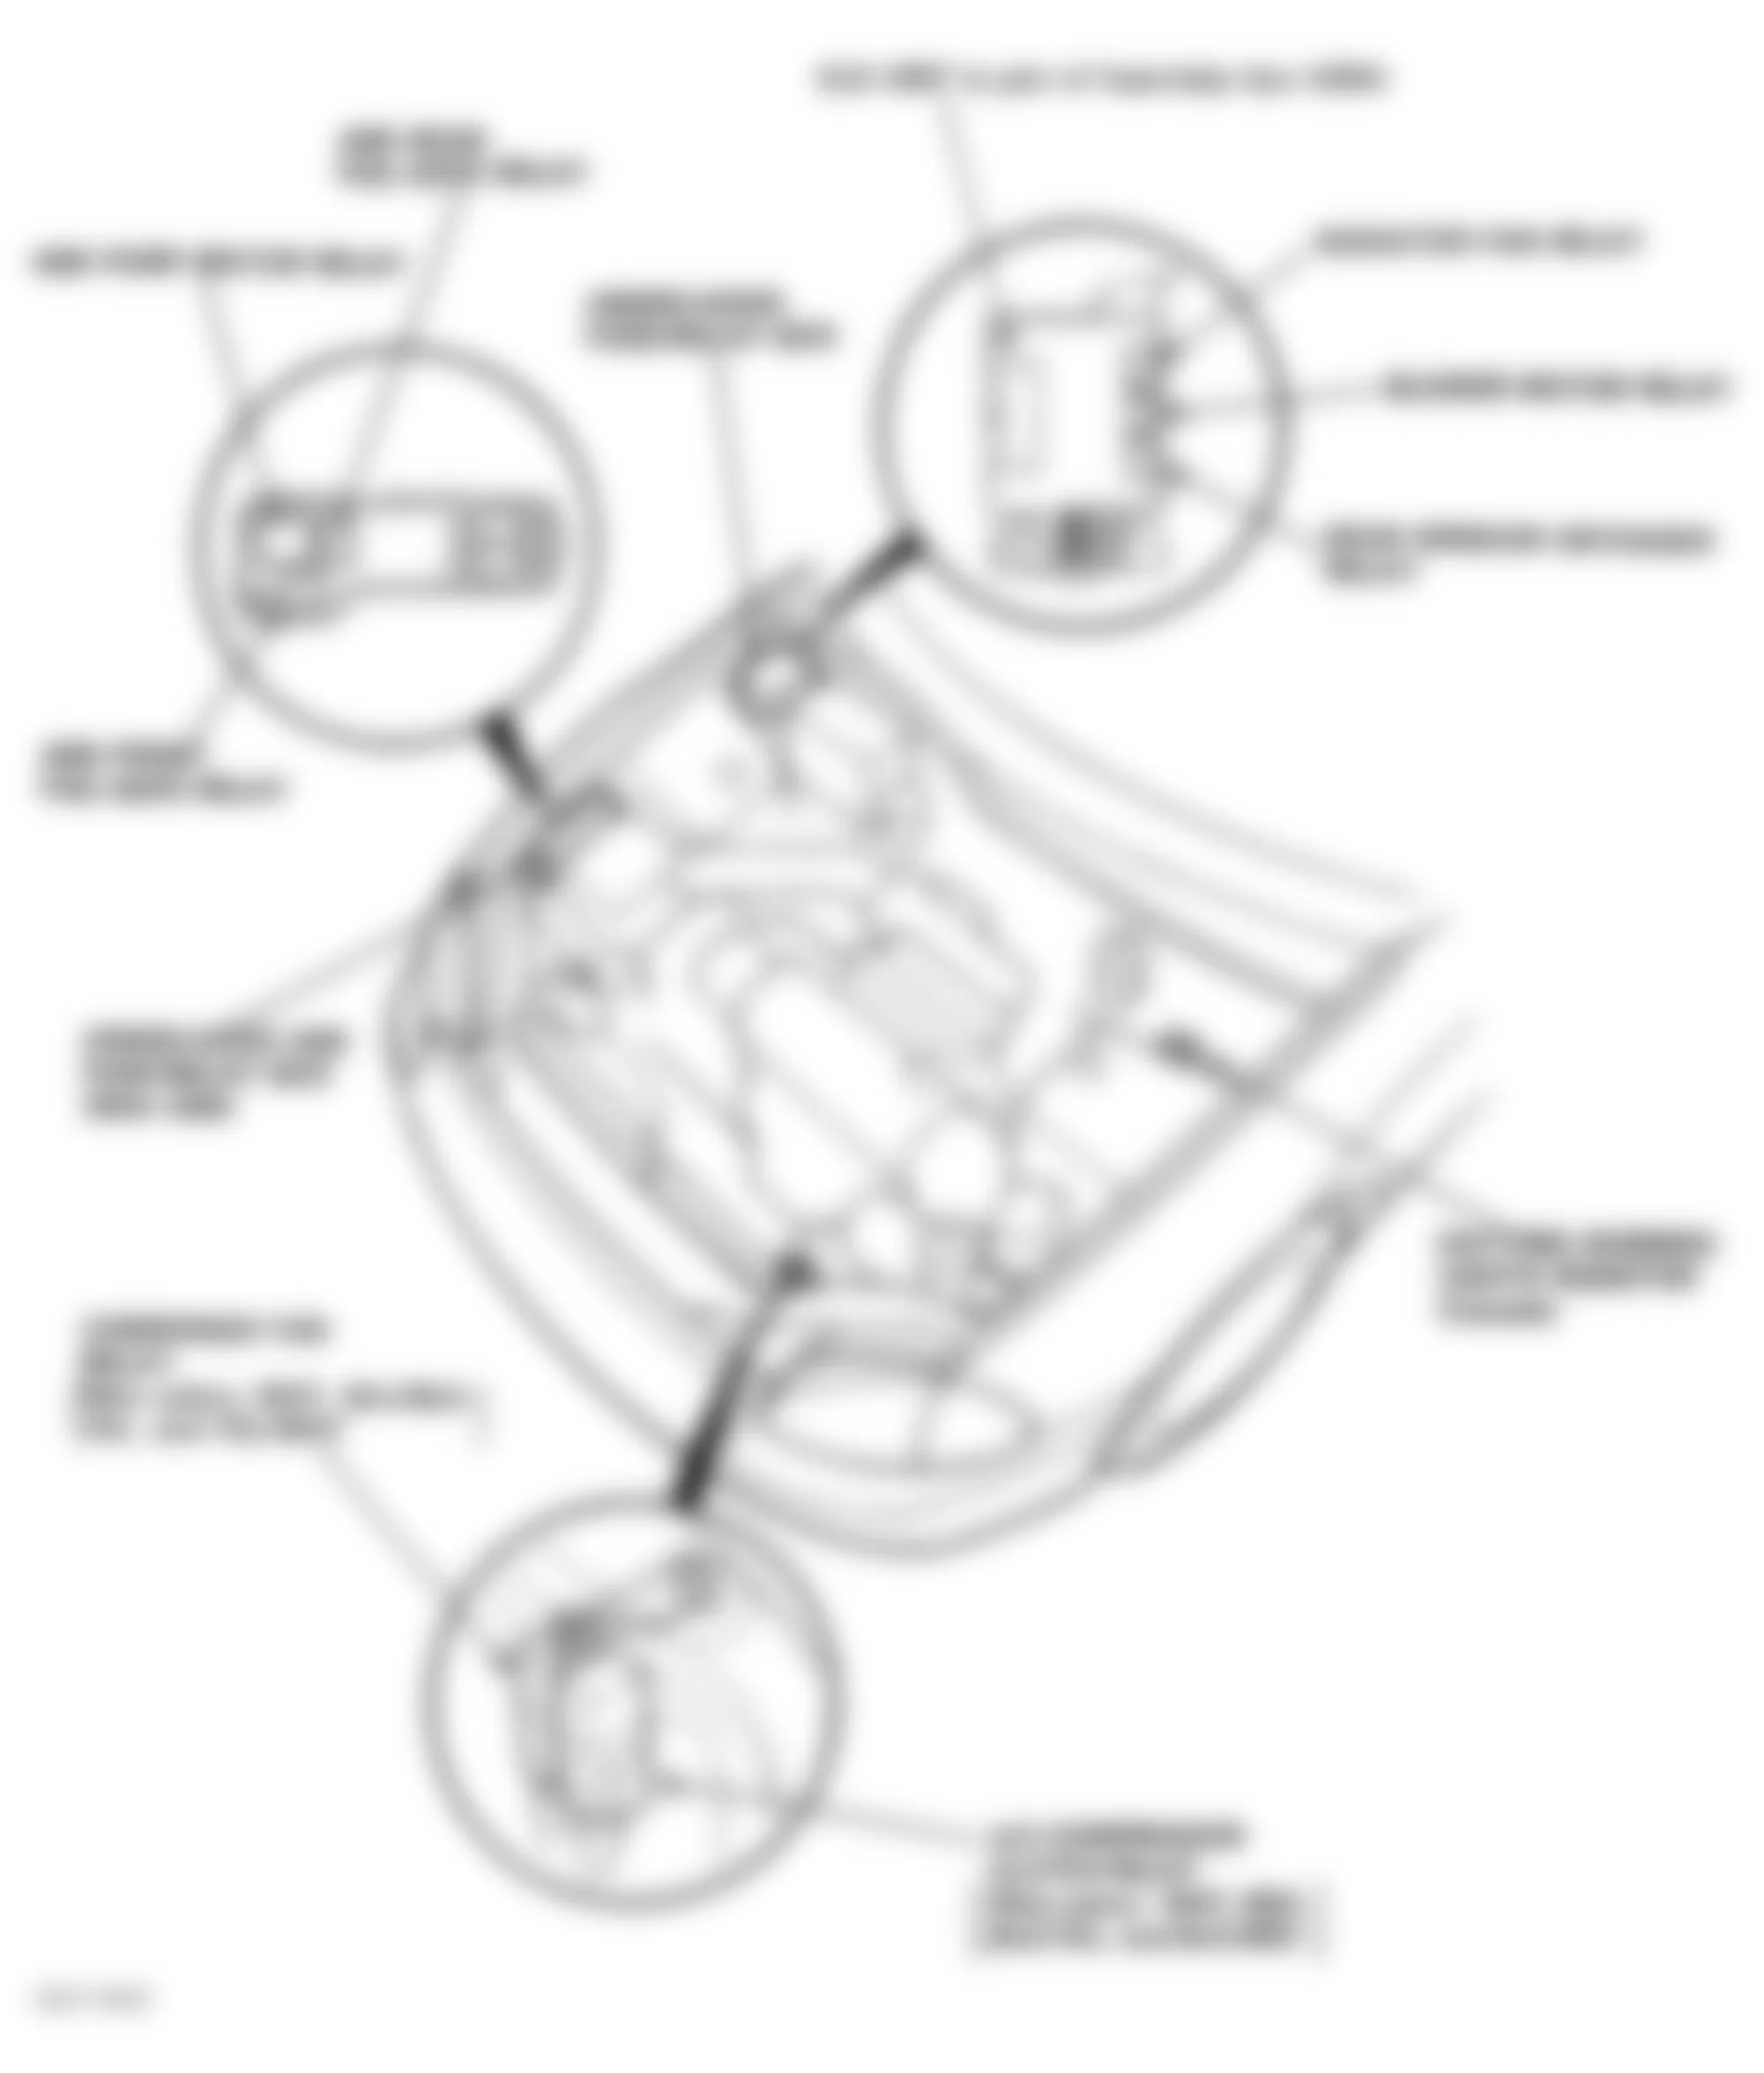 Honda Civic del Sol S 1996 - Component Locations -  Locating Under-Hood ABS Fuse/Relay Box